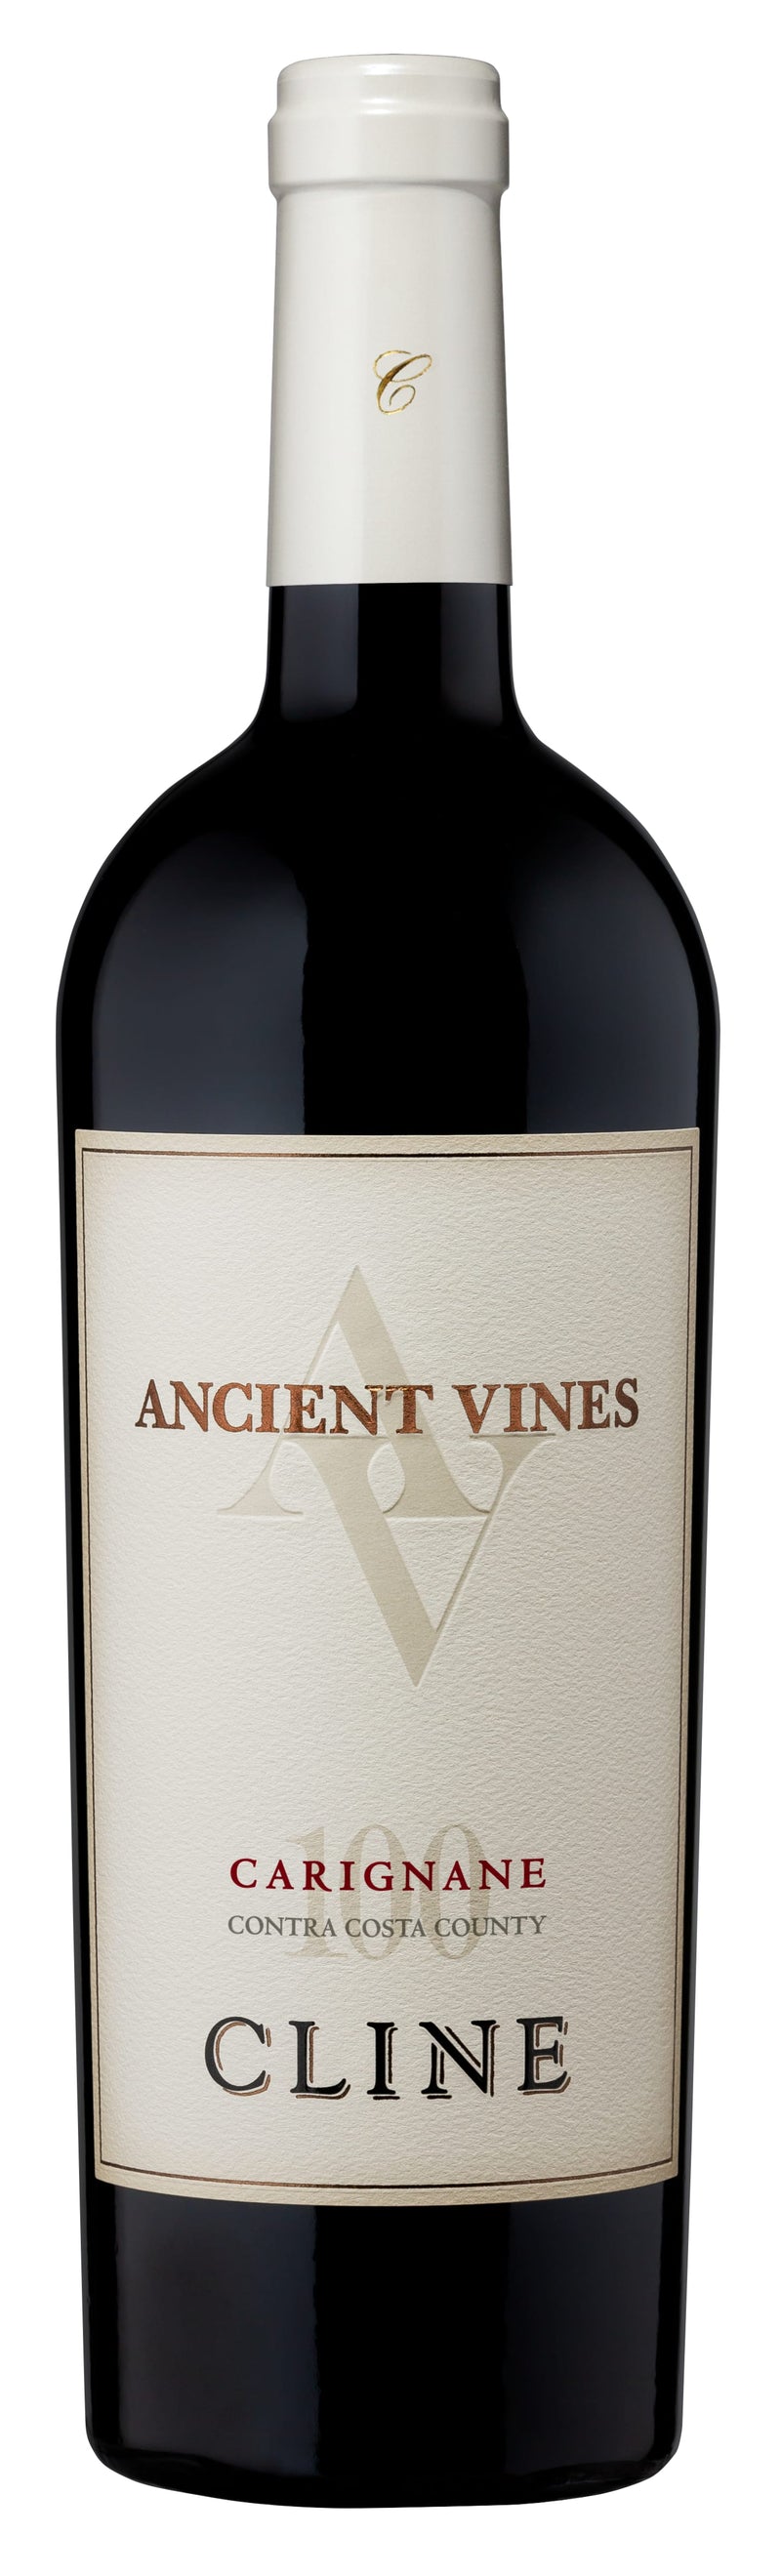 Cline Ancient Vines Carignane, Contra Costa